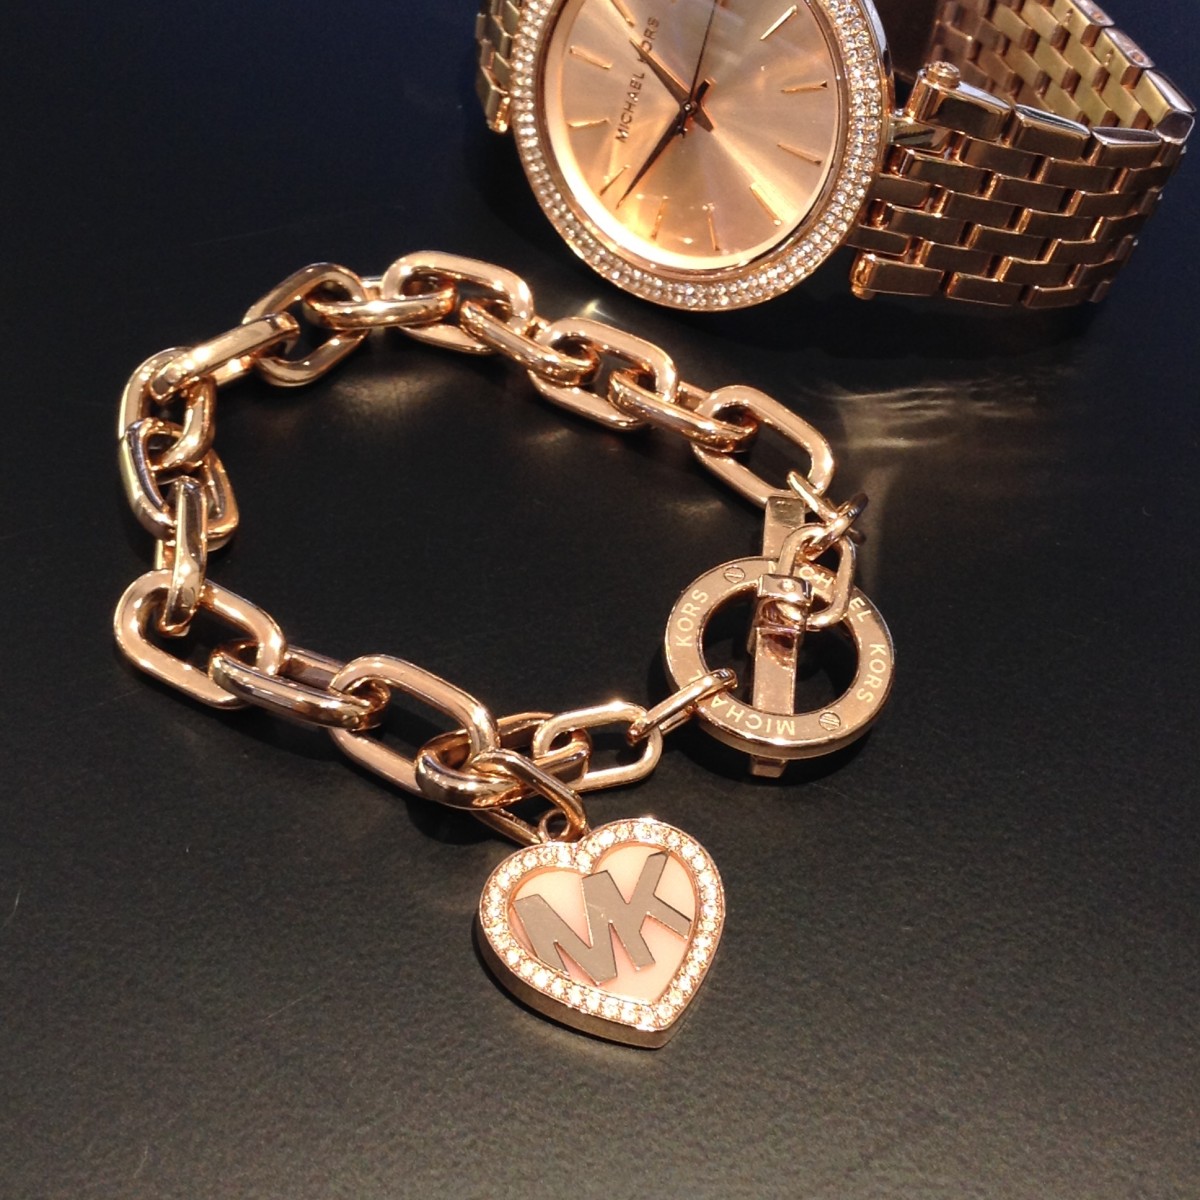 Michael-kors-rose-gold-bracelet-with-lock